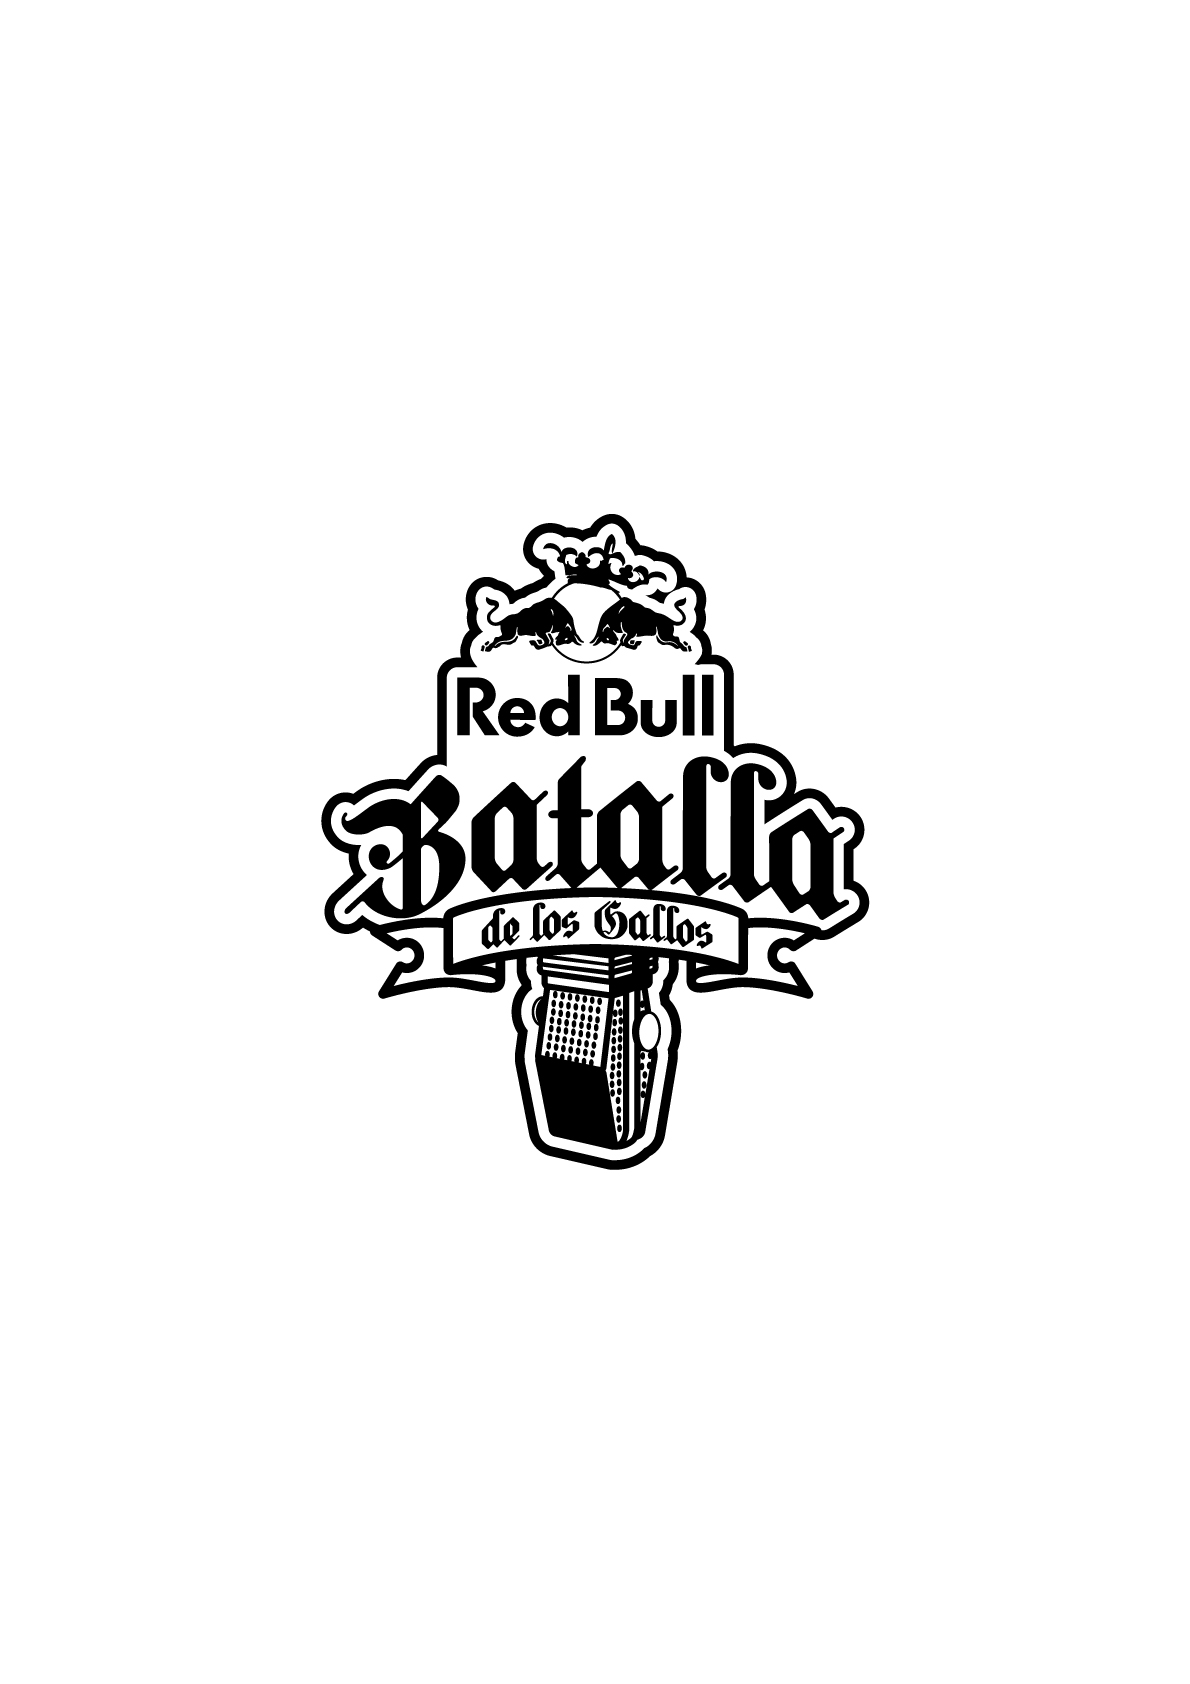 Red Bull Batalla de los Gallos llega a Guadalajara